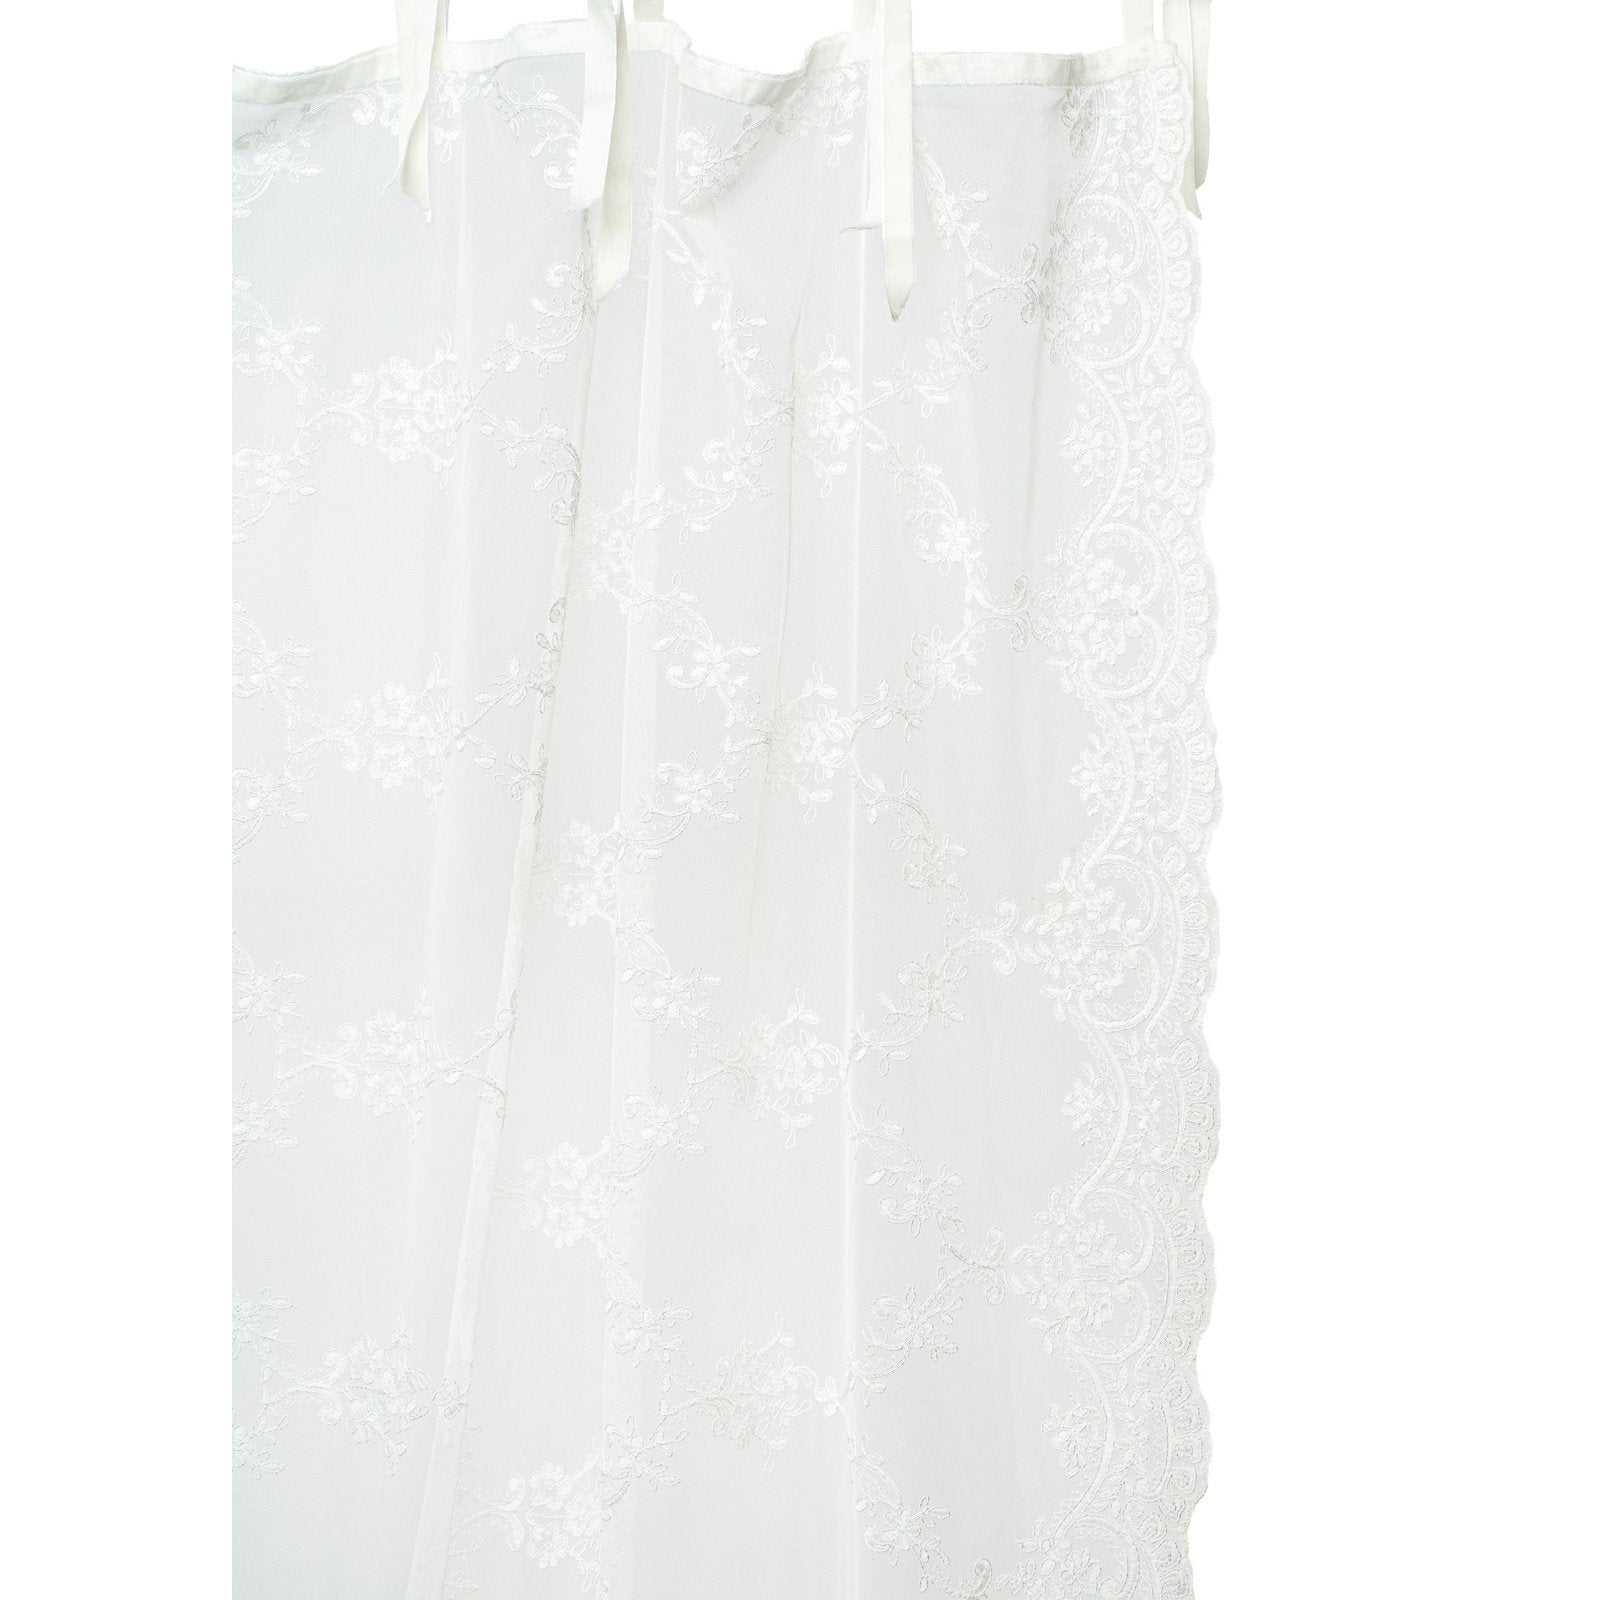 Timeless beauty meets modern convenience: Amelia's machine-washable lace retains its charm.